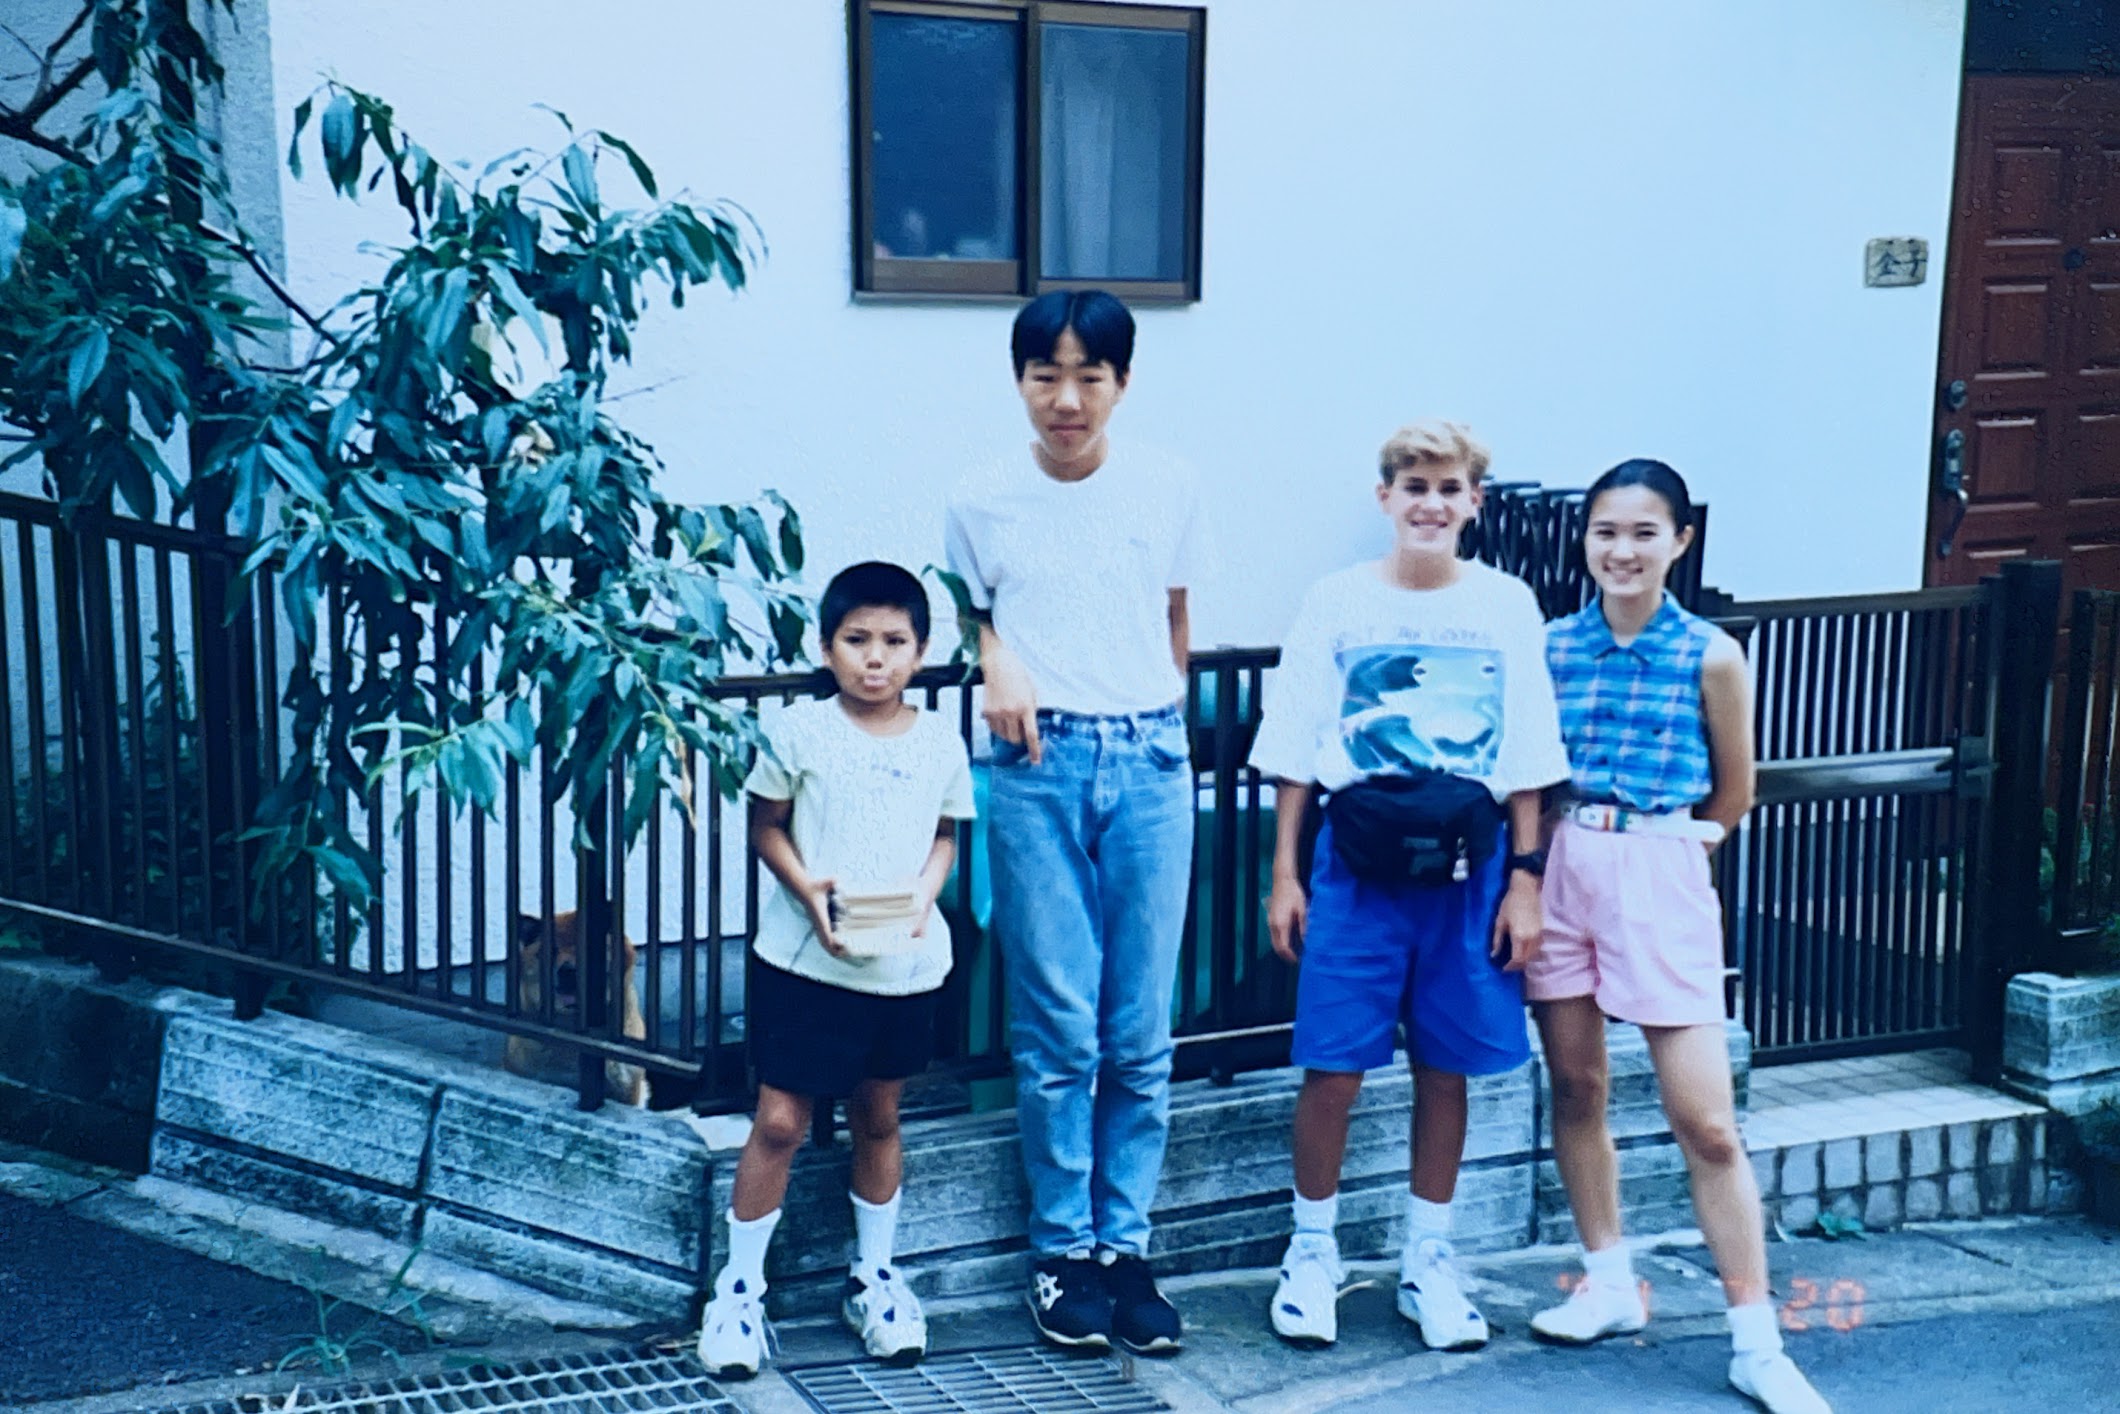 Yukiko and me in Japan in 1994